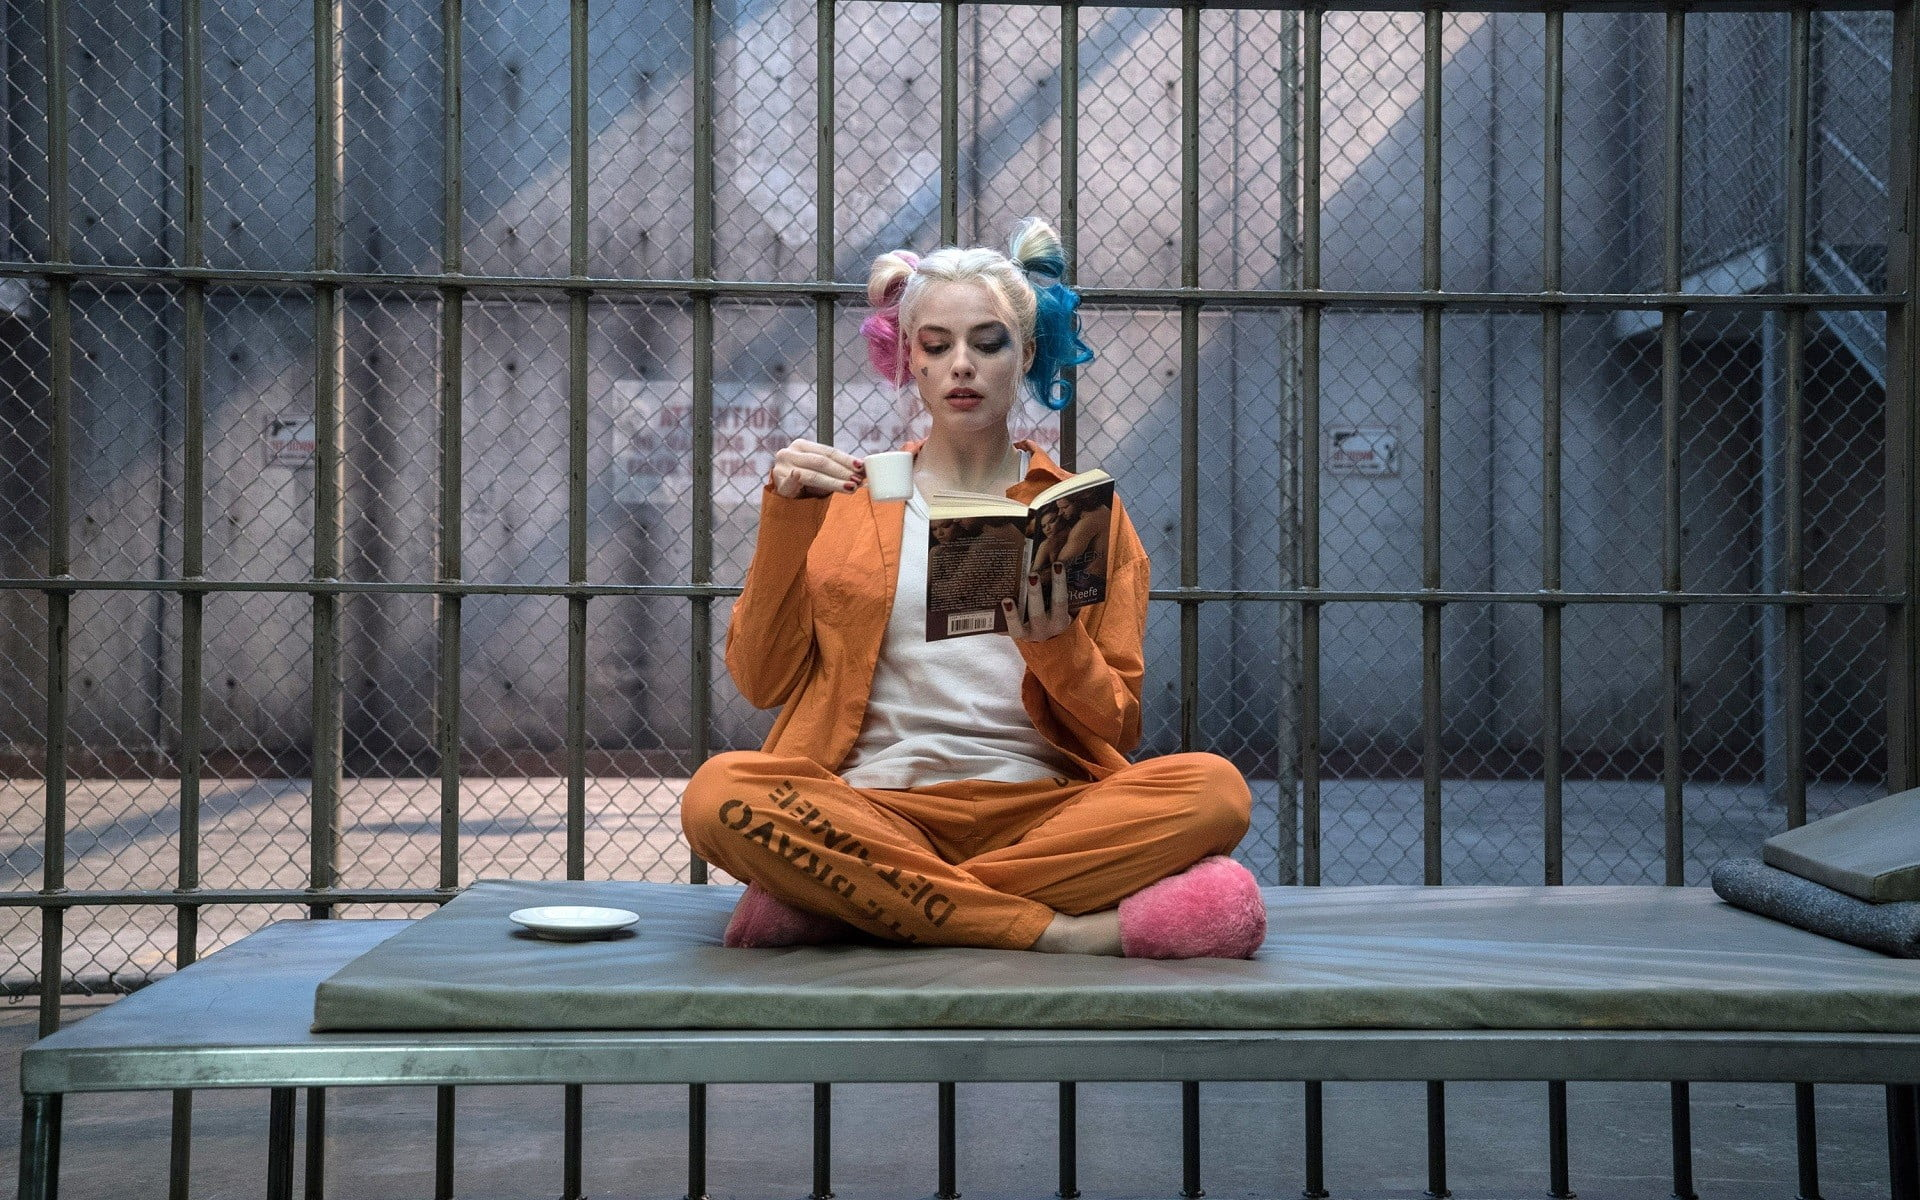 Suicide Squad Harley Quinn Margot Robbie movie still wallpaper